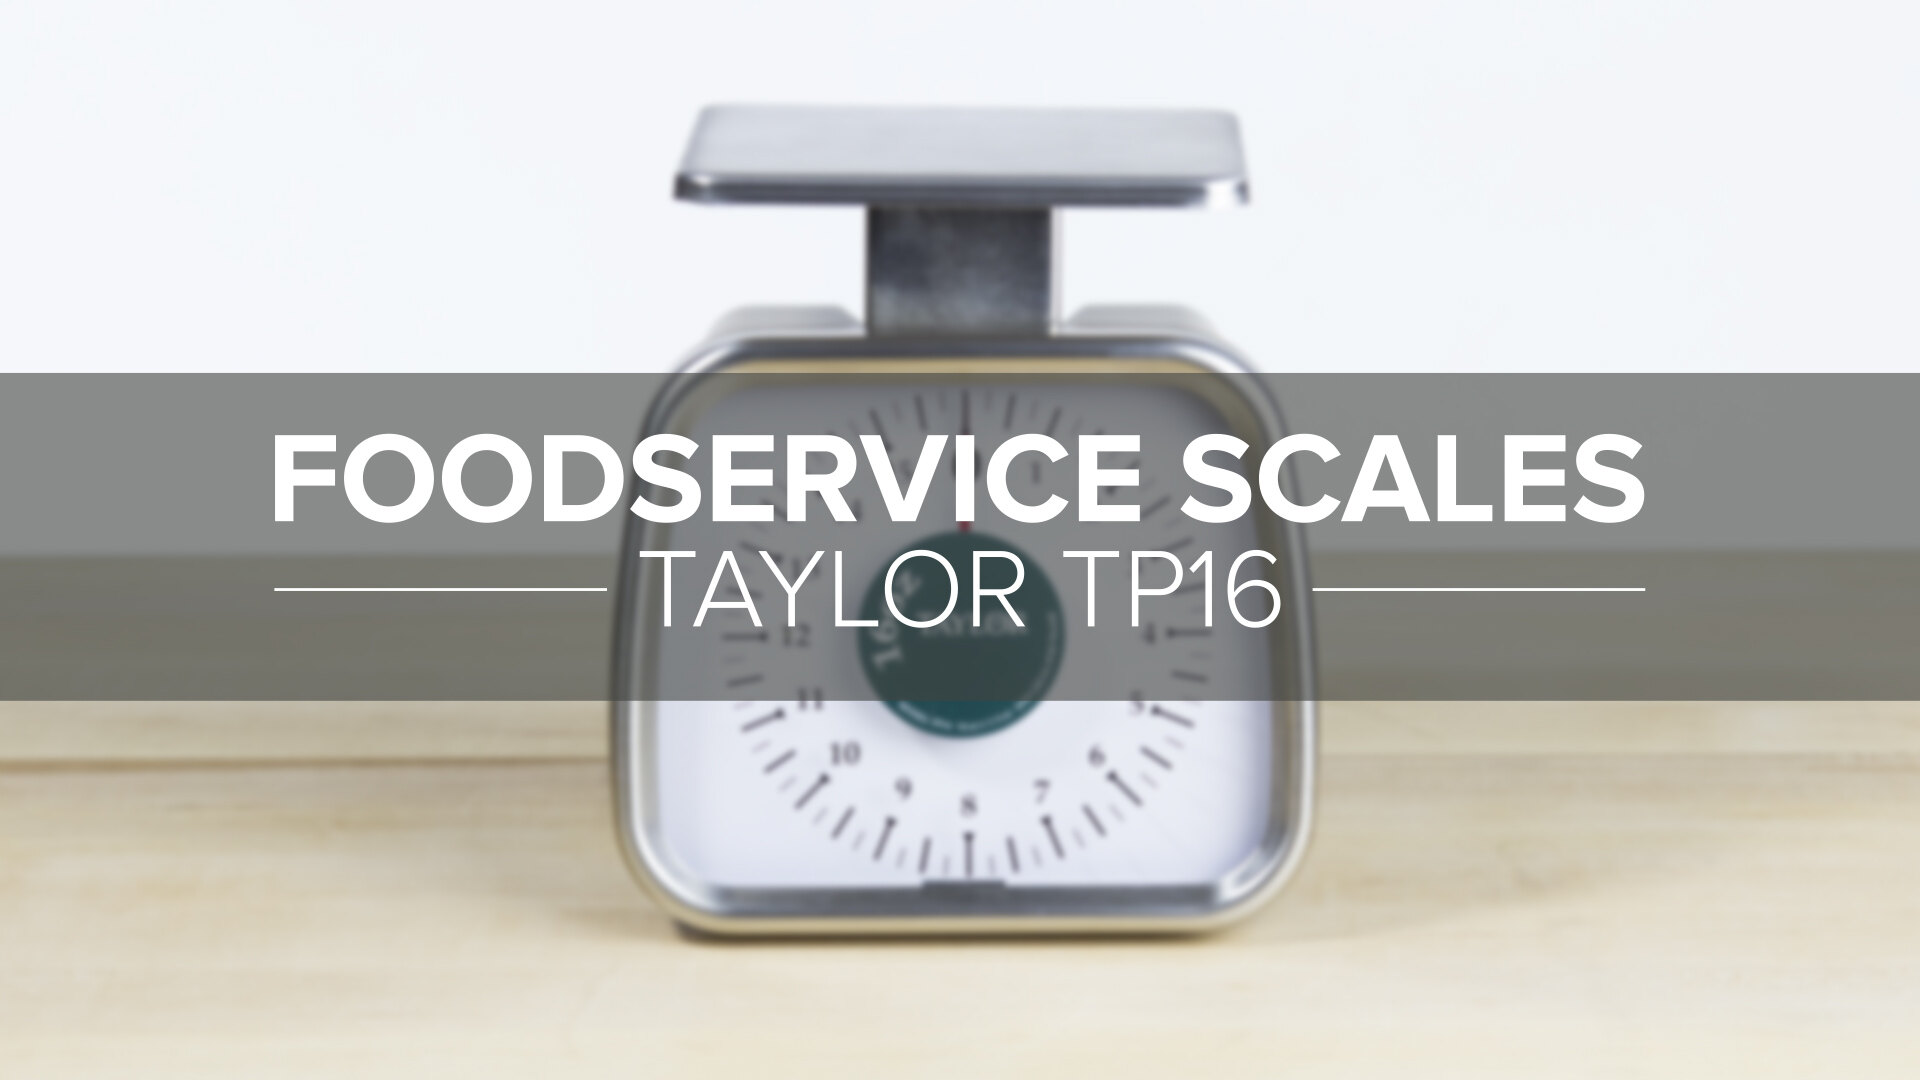 Taylor TS32 Food Service Analog Portion Control Scale, 32 oz x 0.25 oz